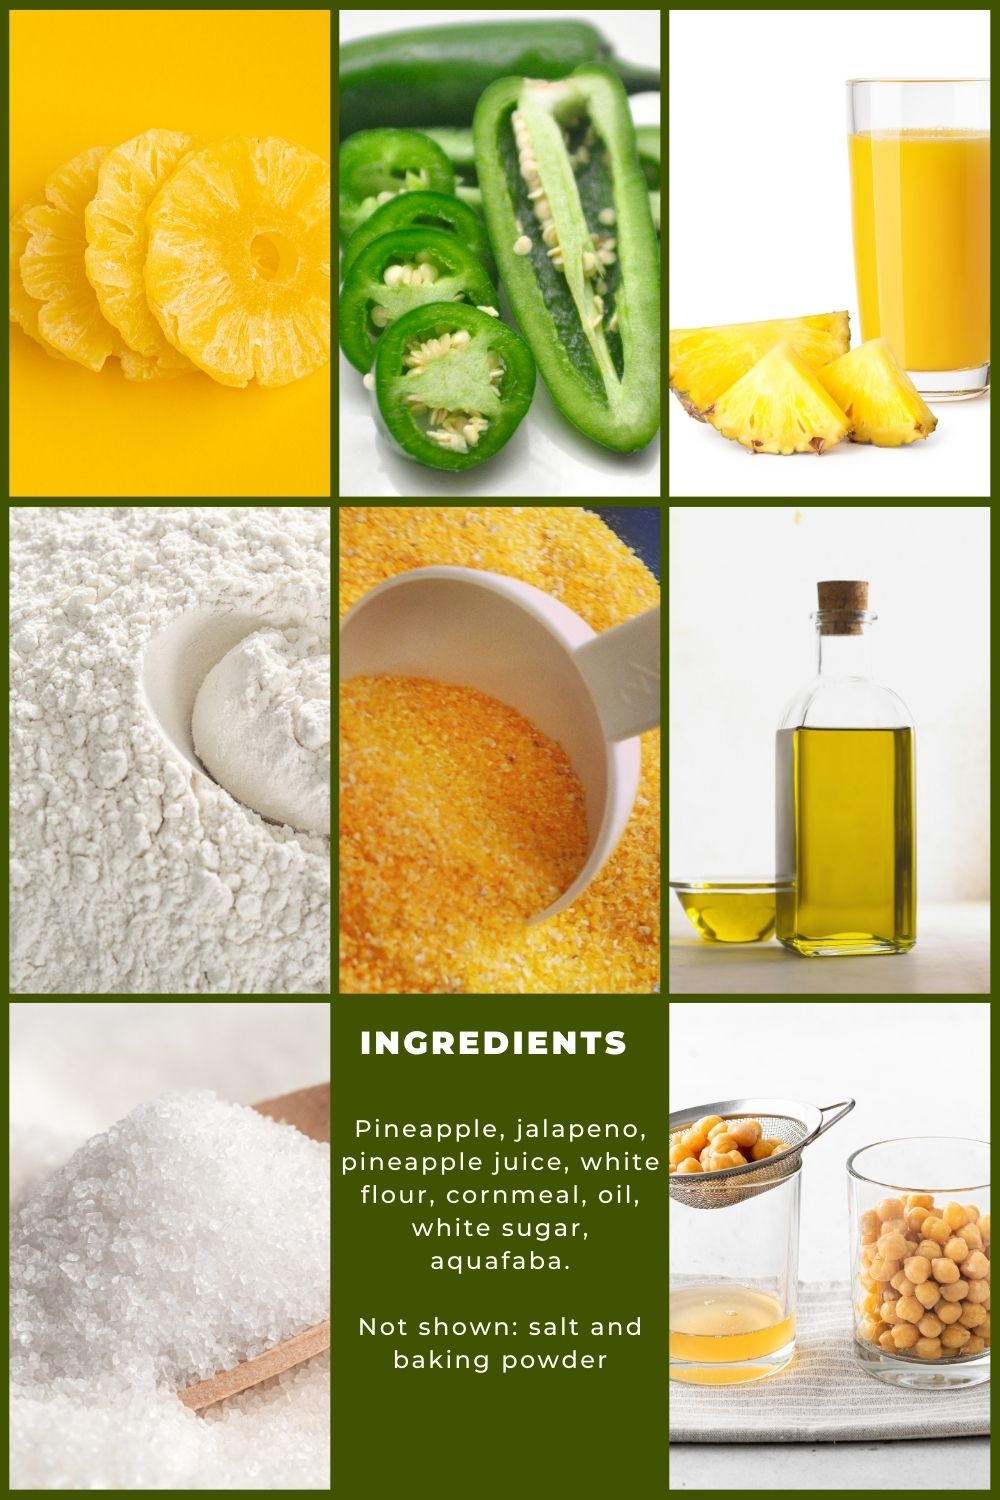 Ingredients of Pineapple Jalapeno Cornbread. Pineapple, jalapeno, pineapple juice, white flour, cornmeal, olive oil, sugar, aquafaba. Not shown salt and baking powder